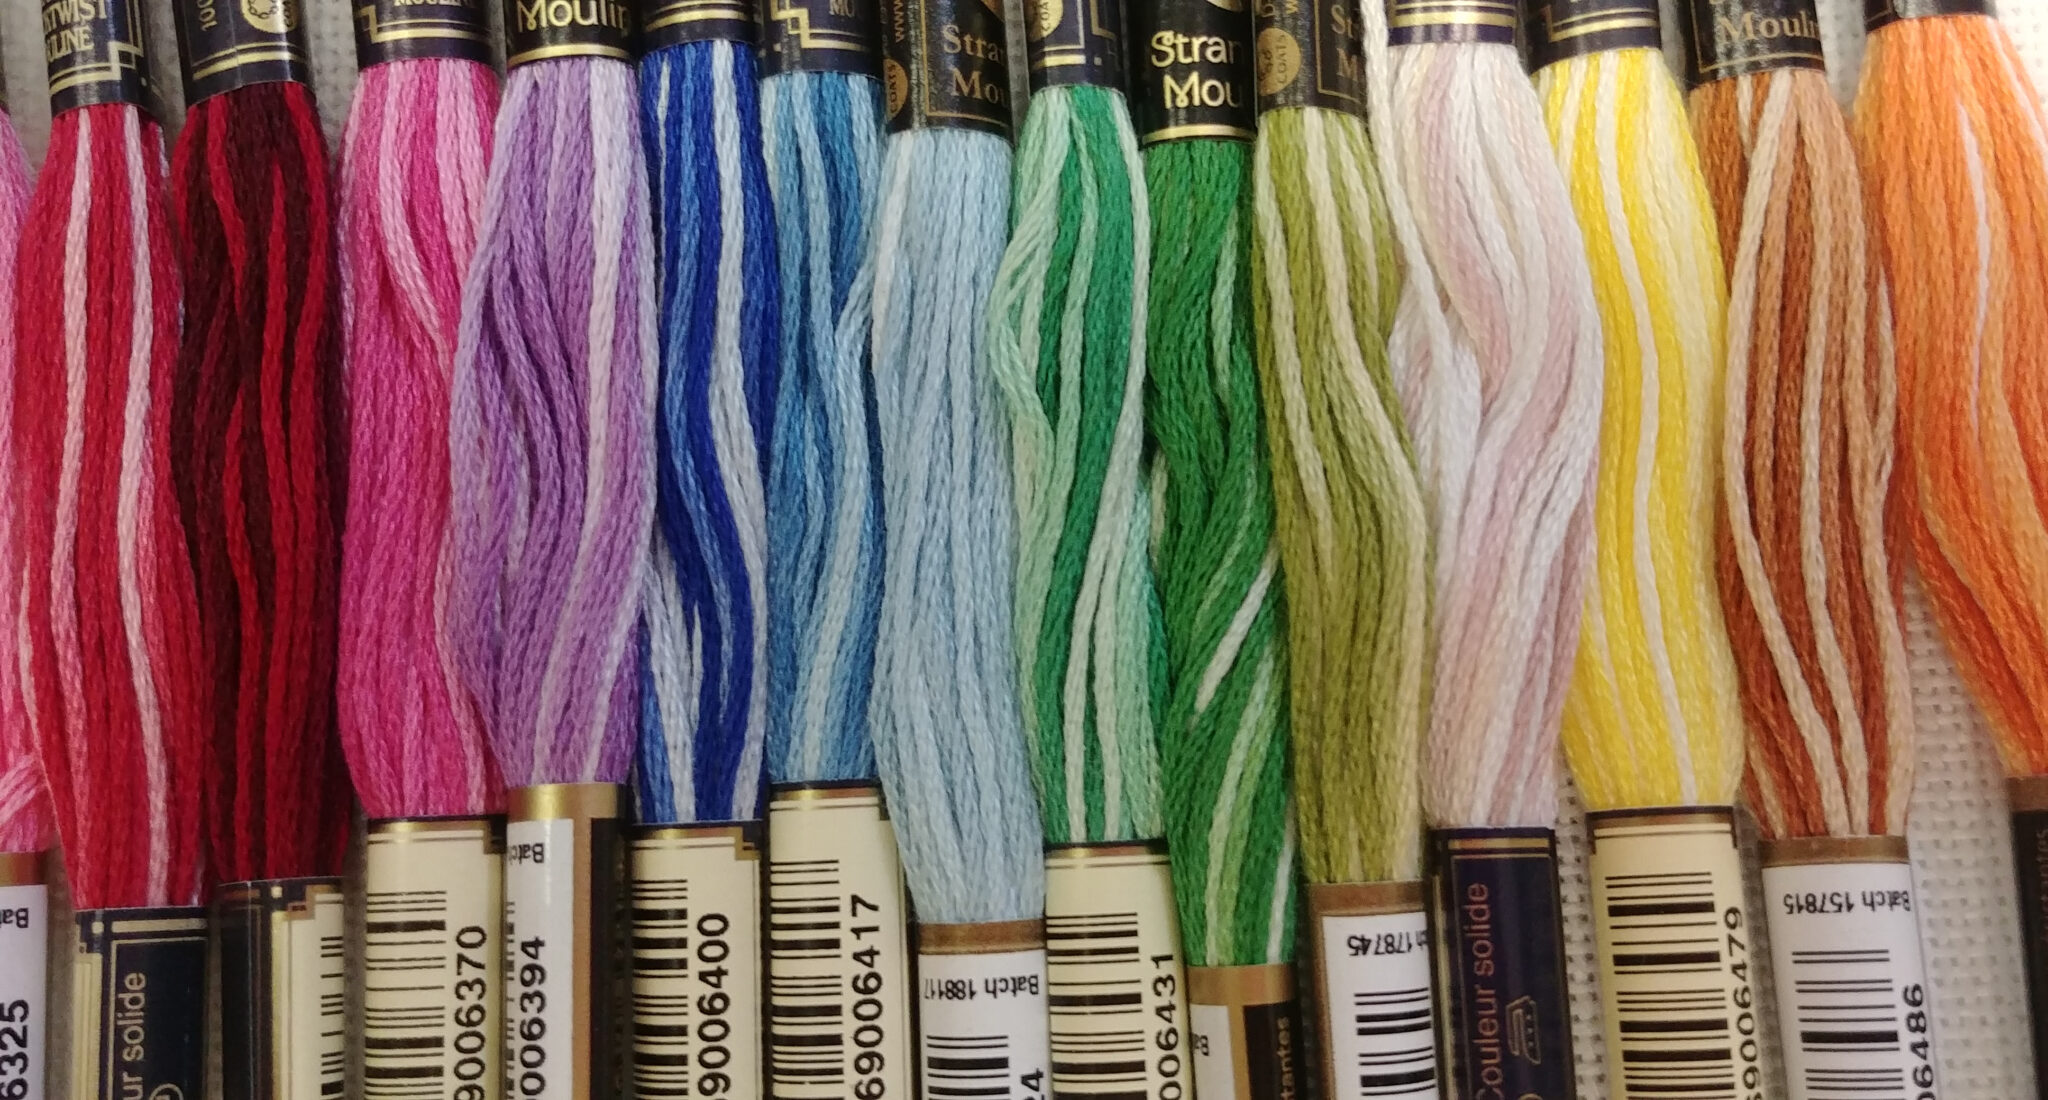 50 Color Premium Cotton Embroidery Floss Set - Six Strand Thread